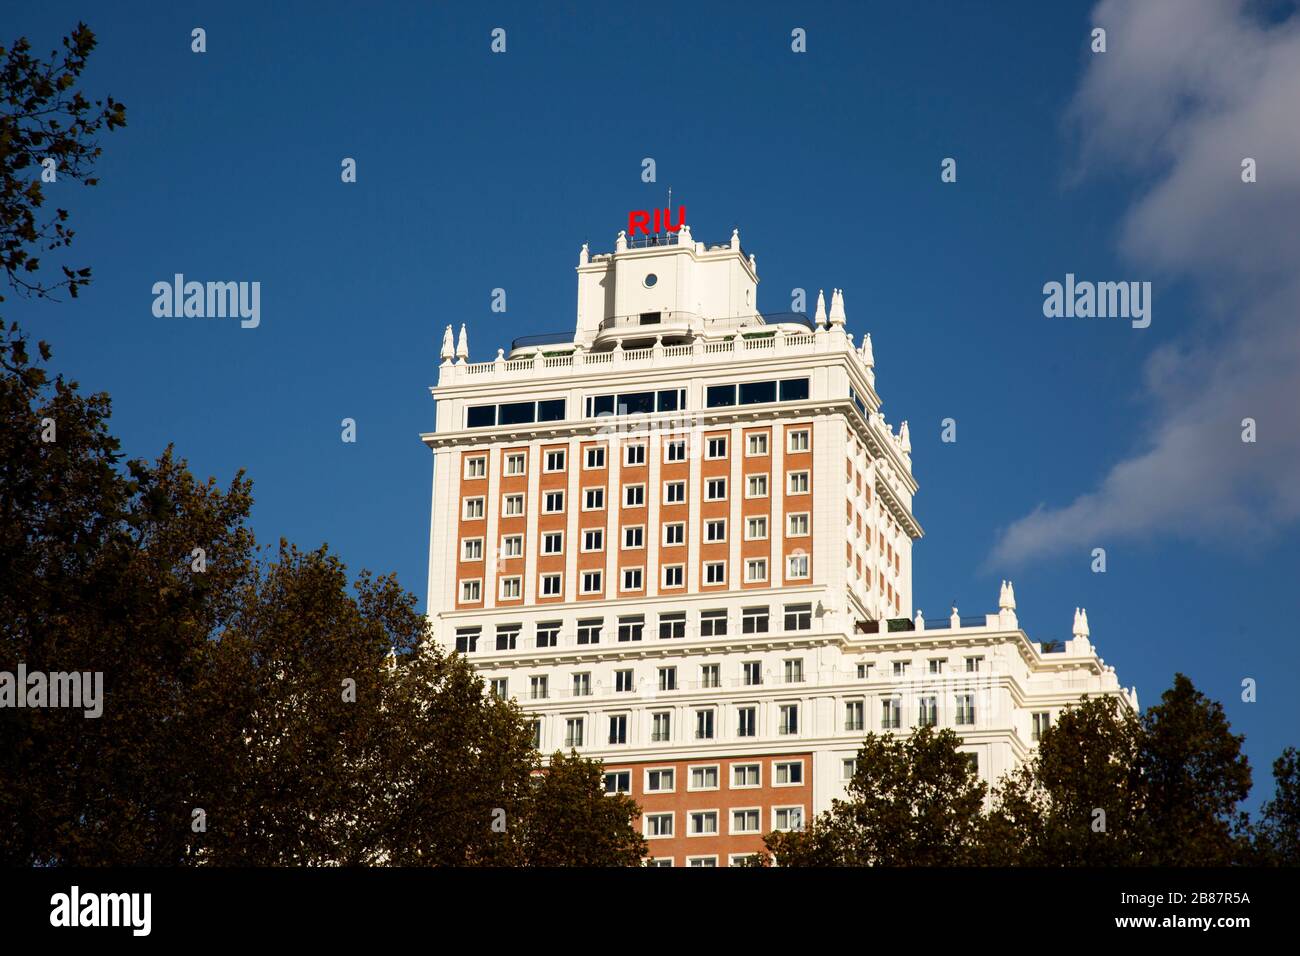 Hotel Riu at the Gran Via of Madrid. Spain Stock Photo